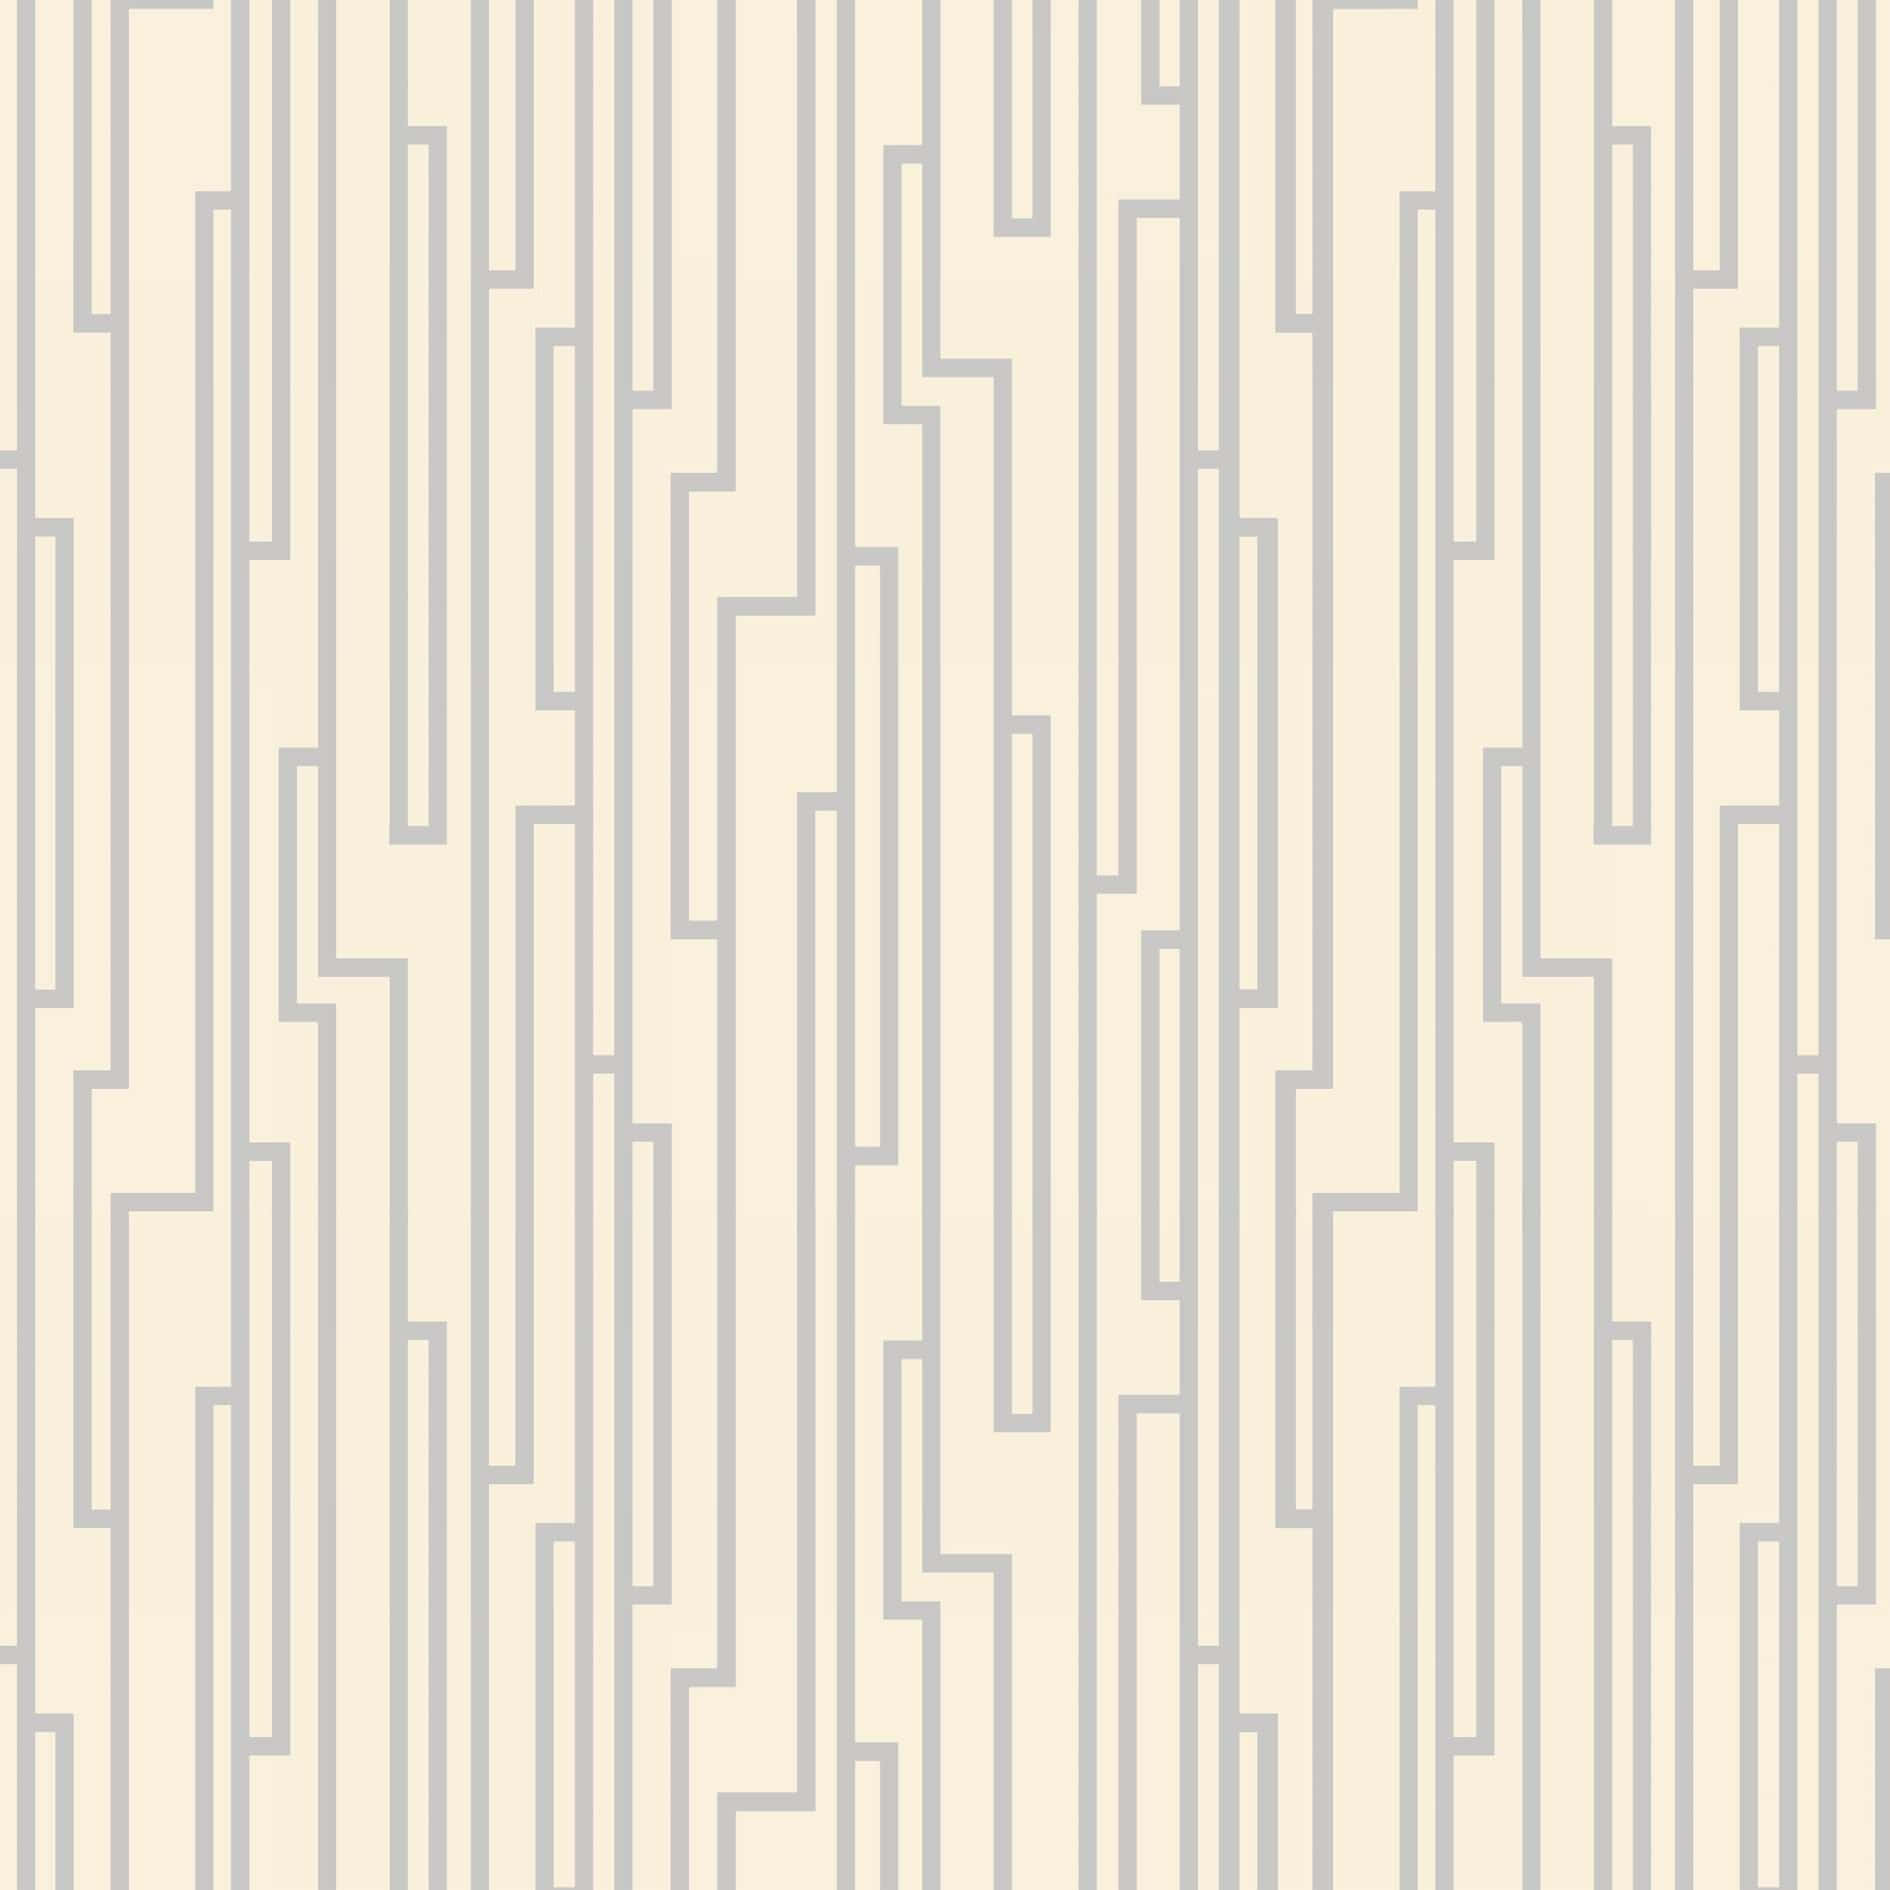 Abstract Waveform Gradient Background